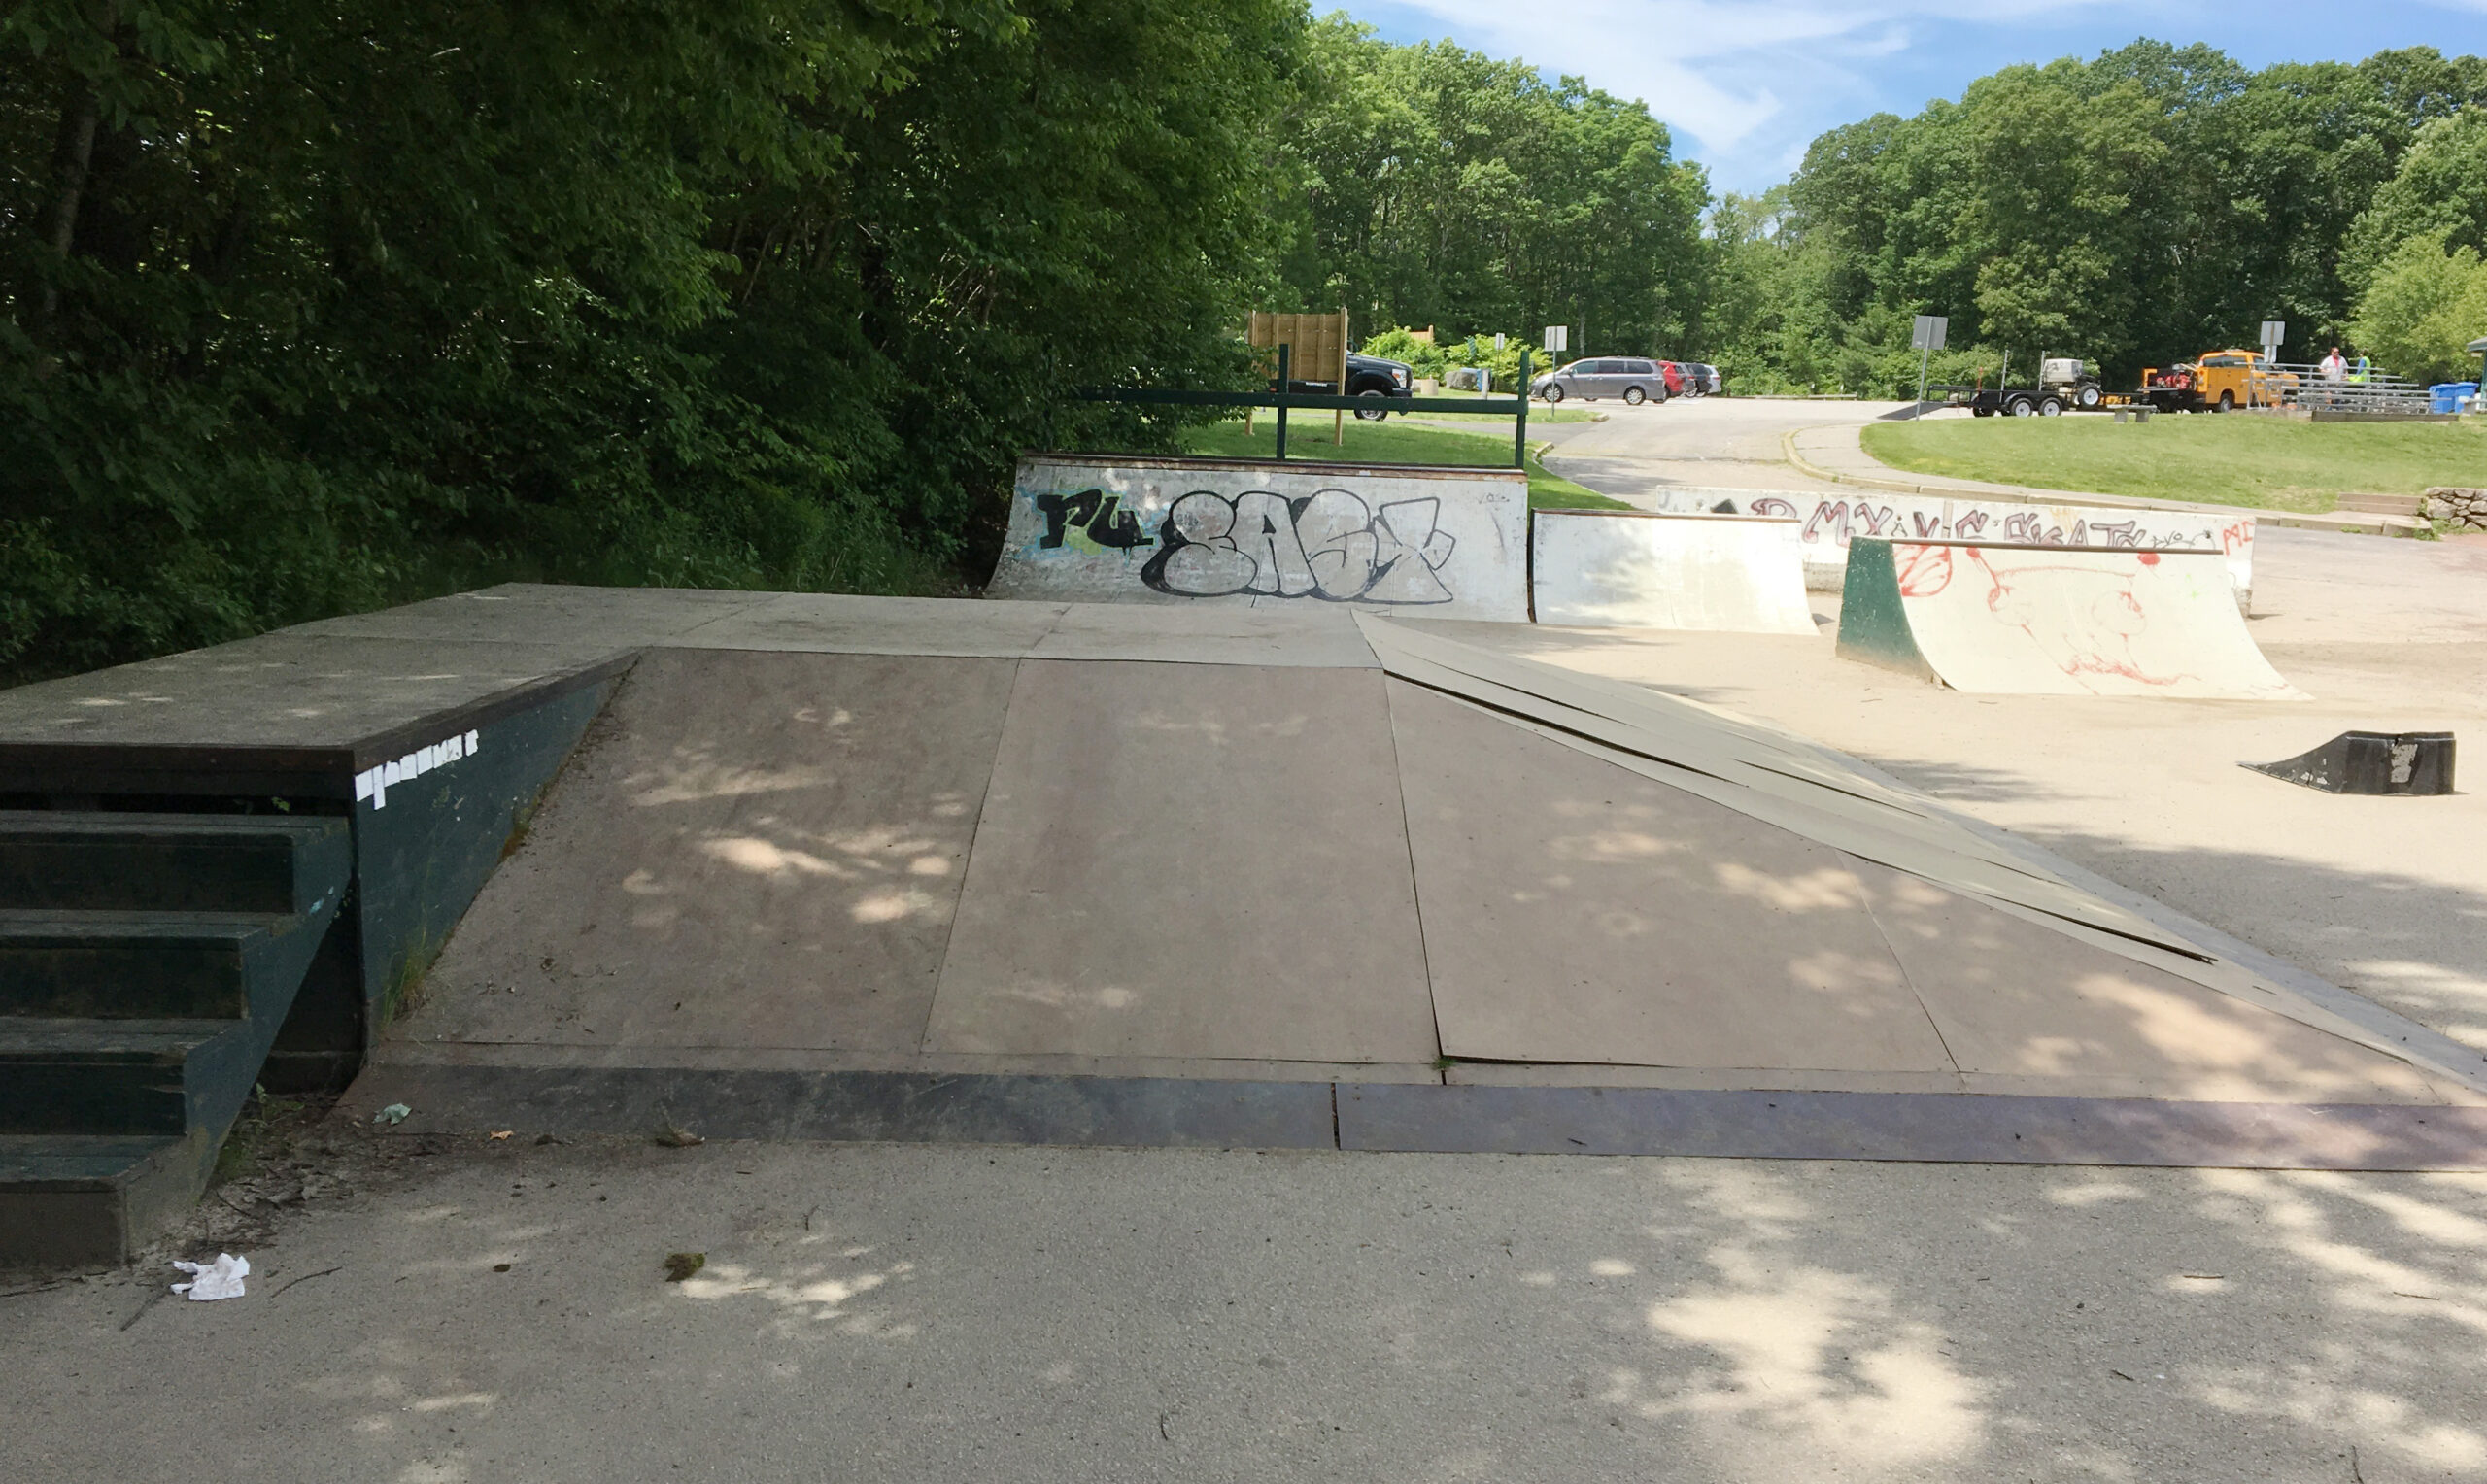 Parks & Rec moves forward with skate park